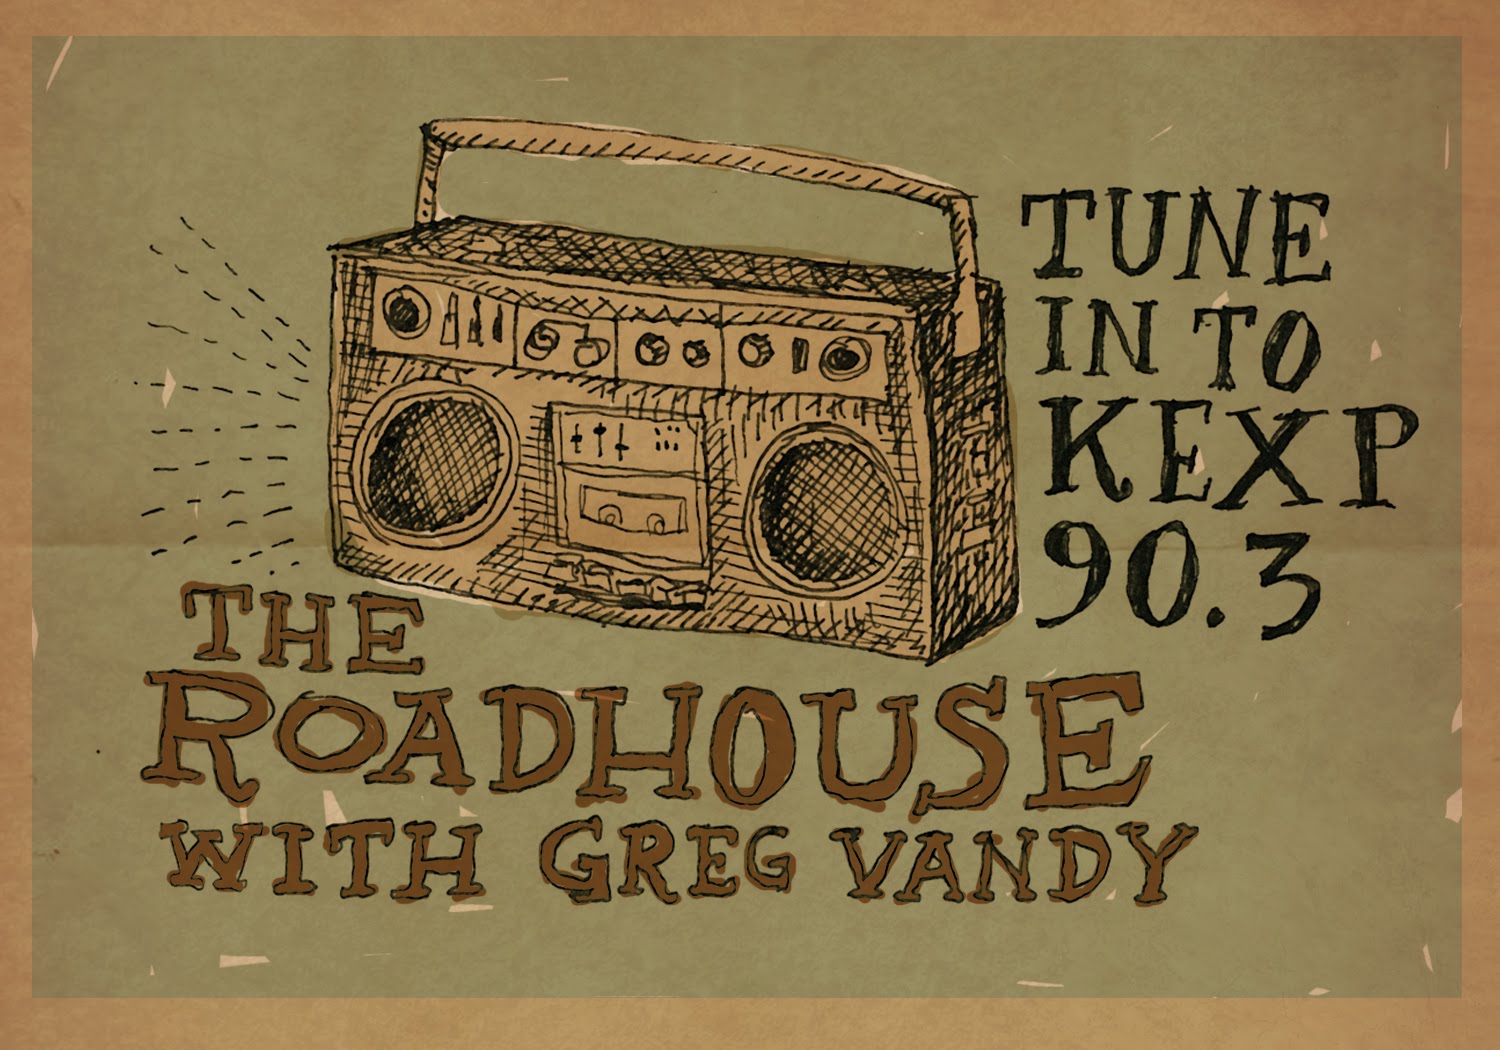 KEXP Radio station Roadhouse Greg Vandy Postcard by Seattle artist illustrator animation drew christie 2011